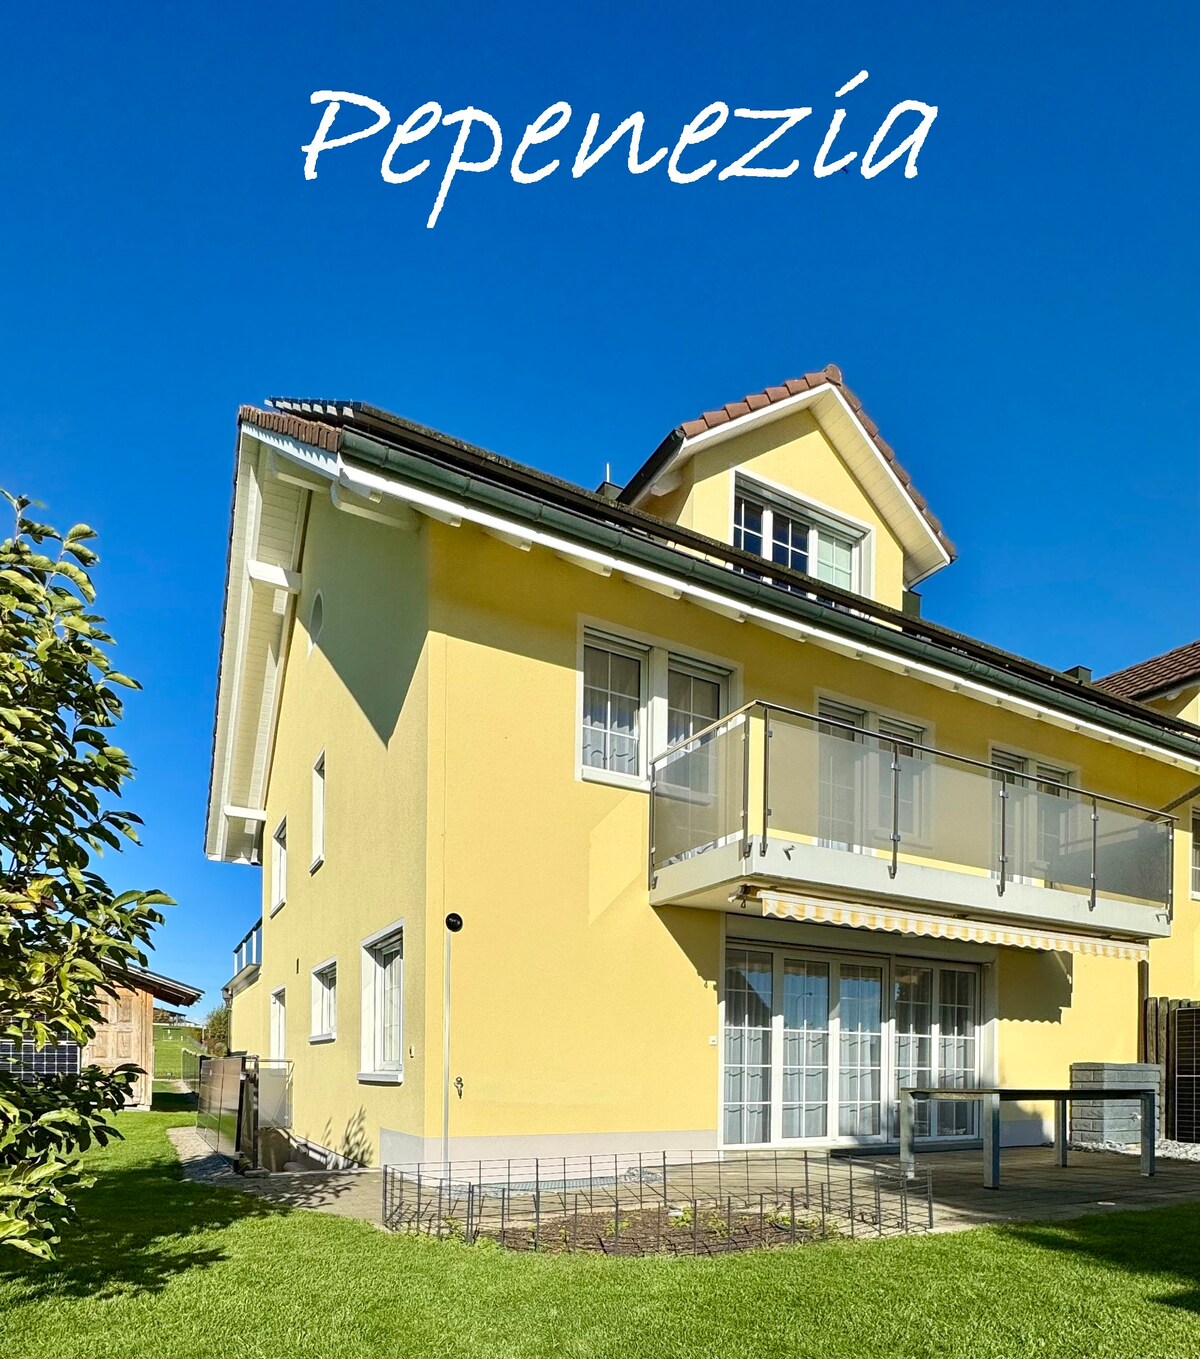 Pepenezia: complete house